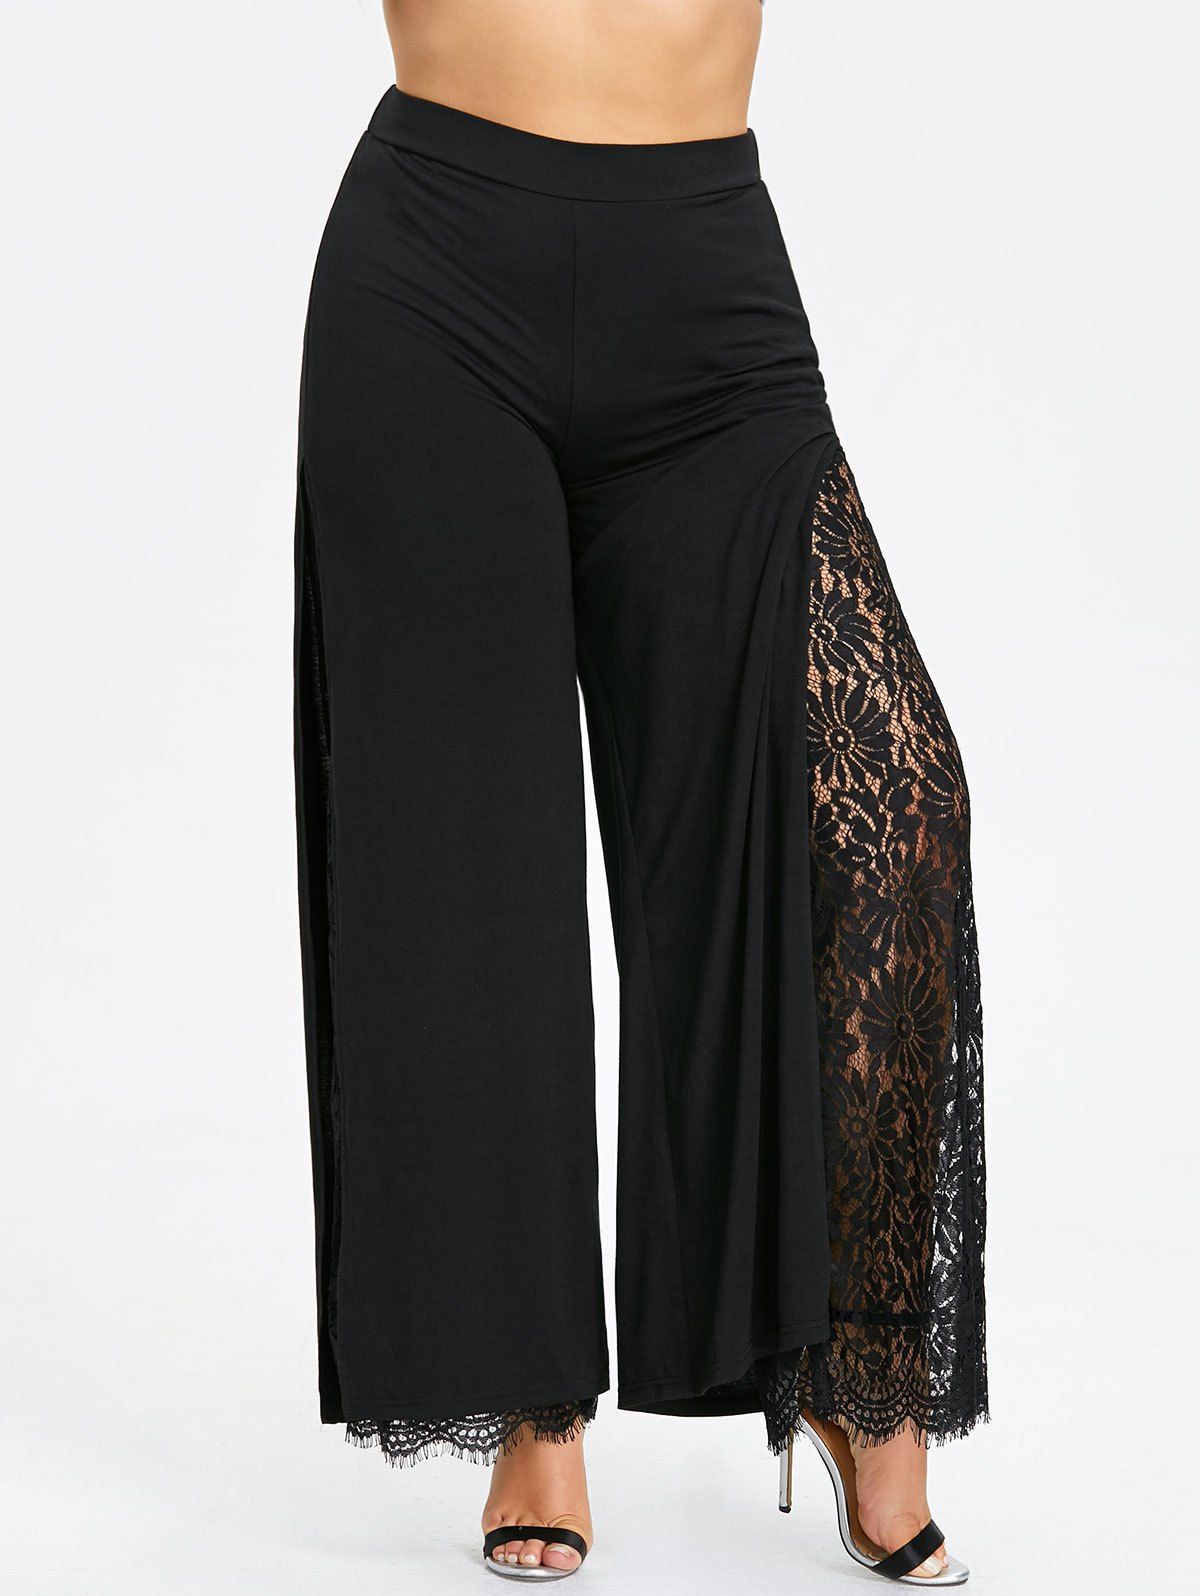 Black 5xl Plus Size Lace High Slit Palazzo Pants | RoseGal.com